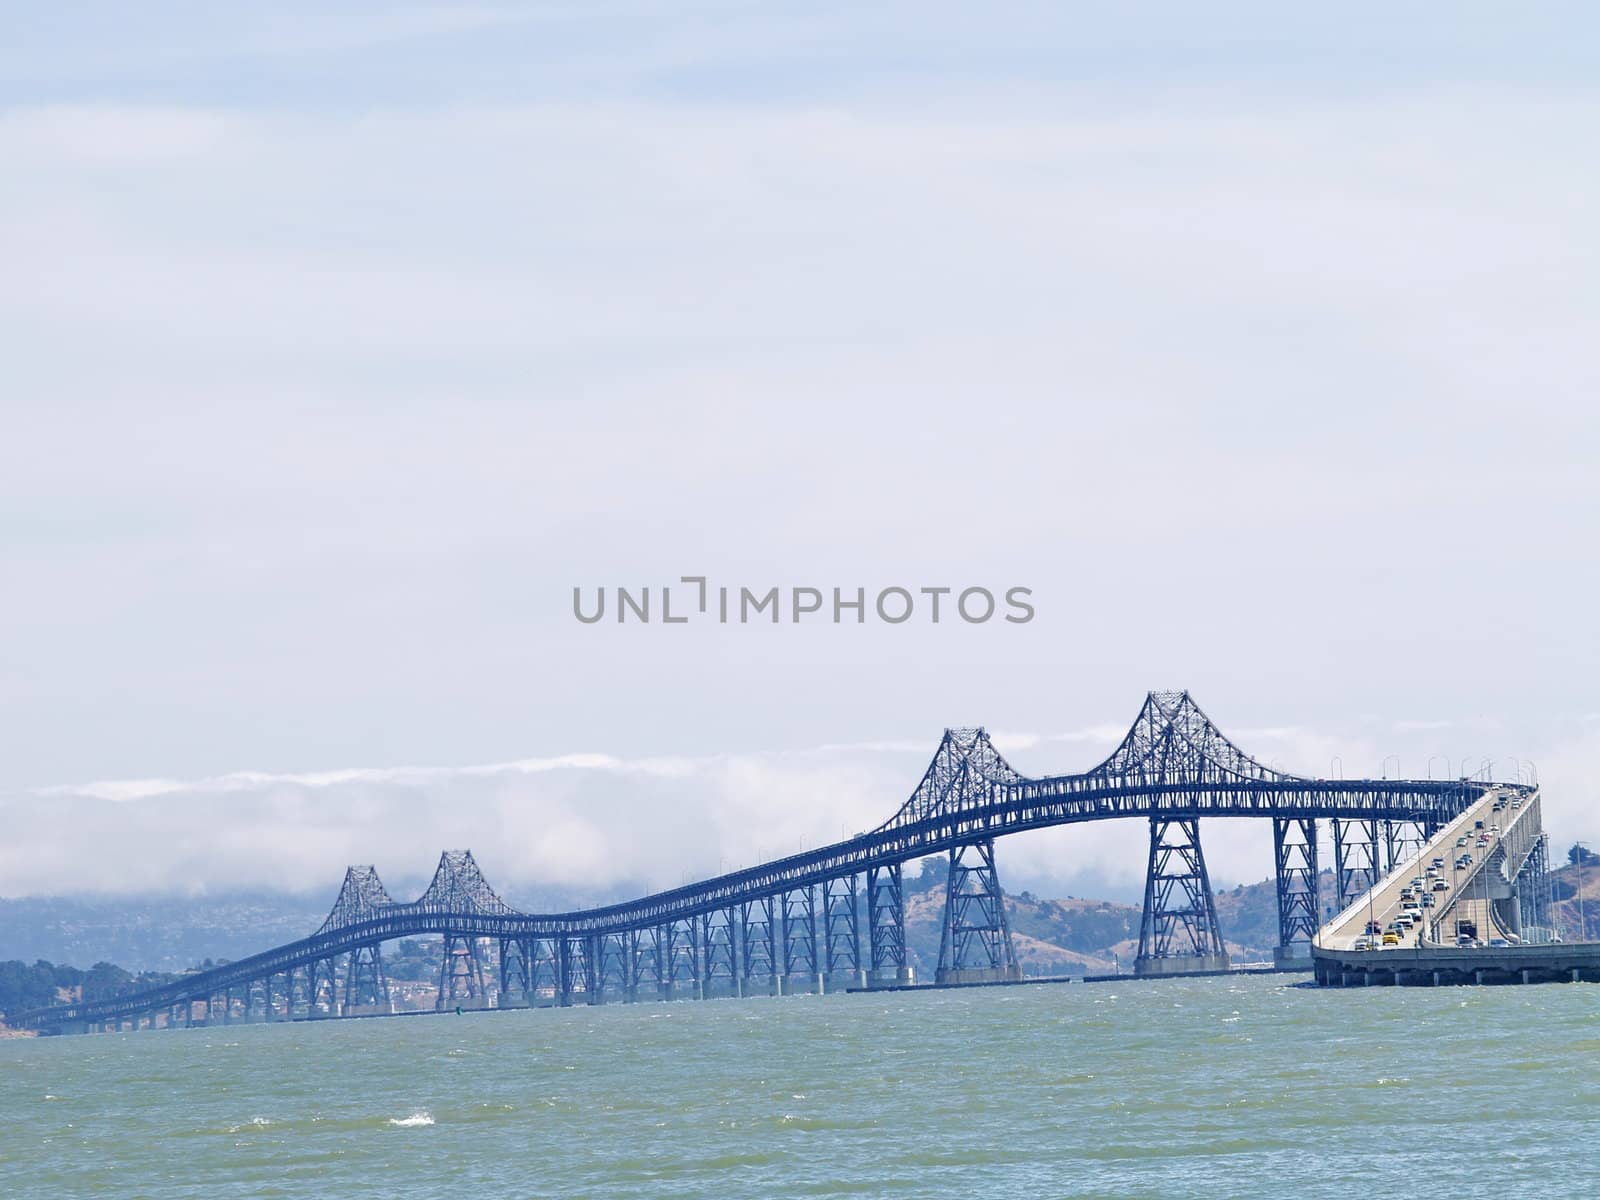 Richmond San Rafael Bridge by anderm